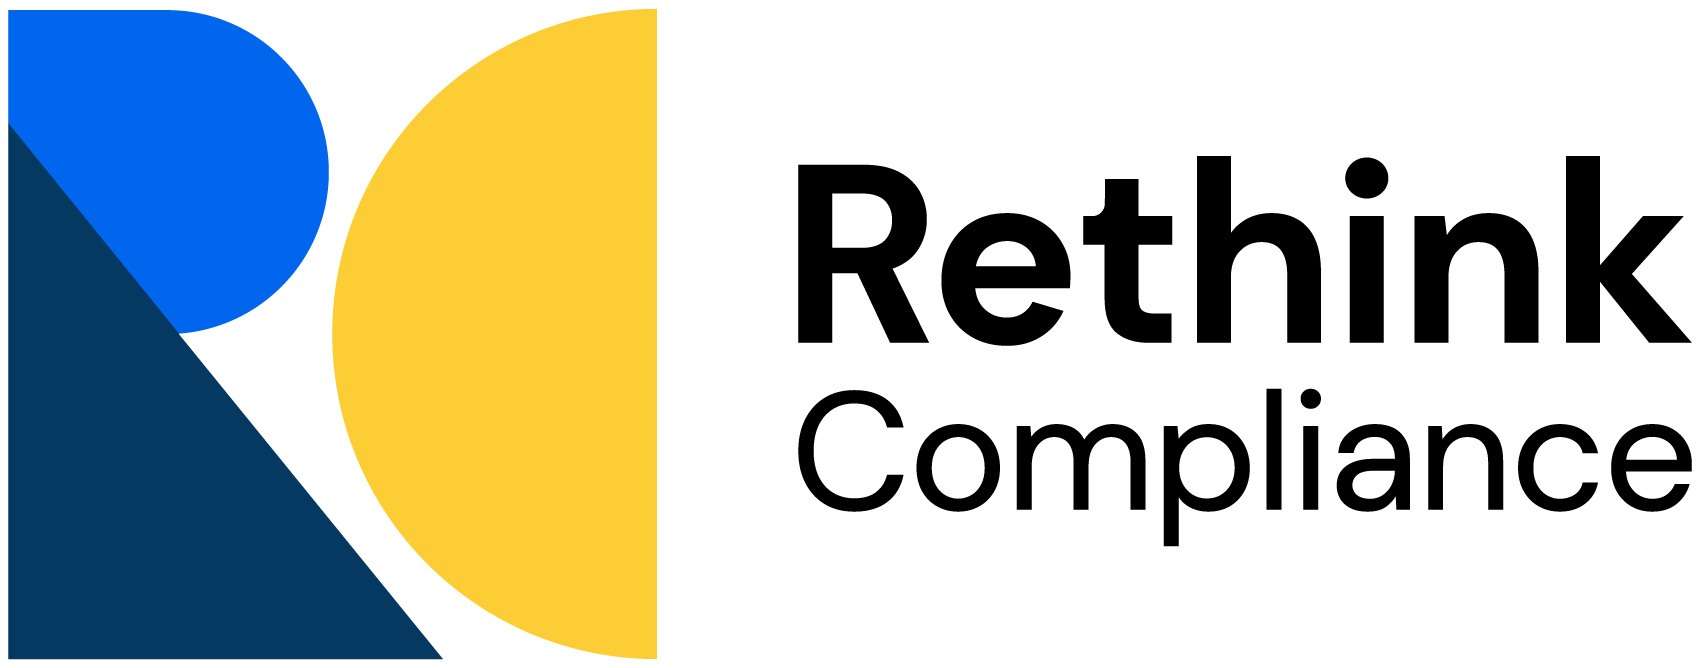 Rethink Compliance logo